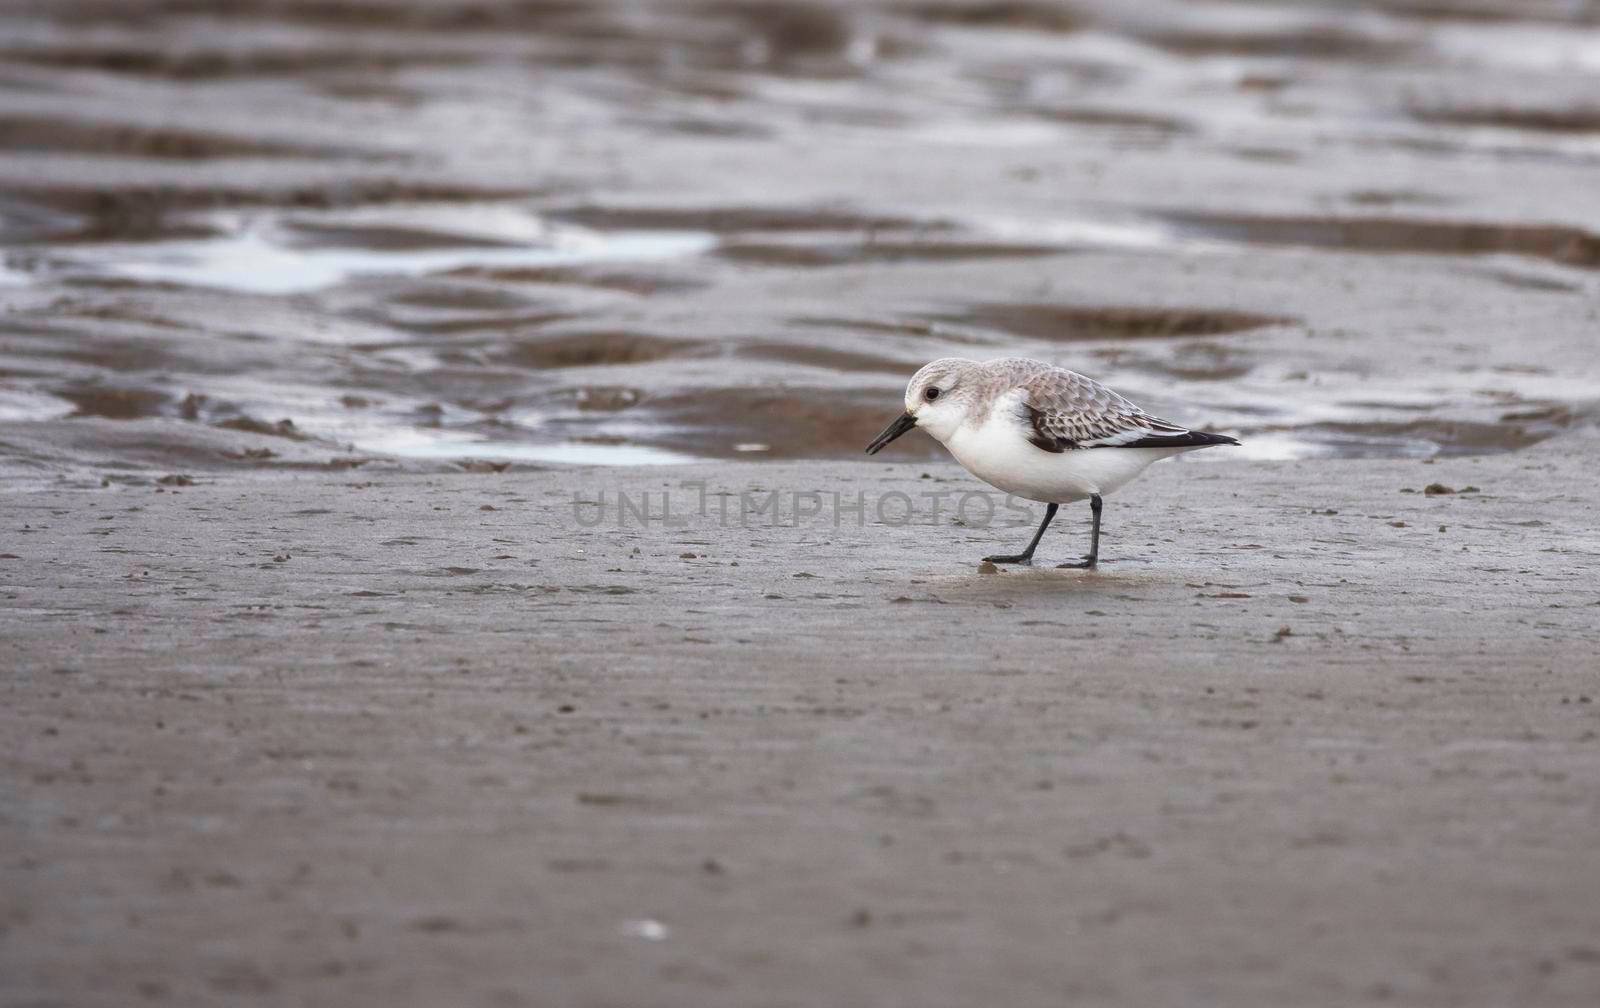 stilt walker or calidris alba bird at the coastline in holland